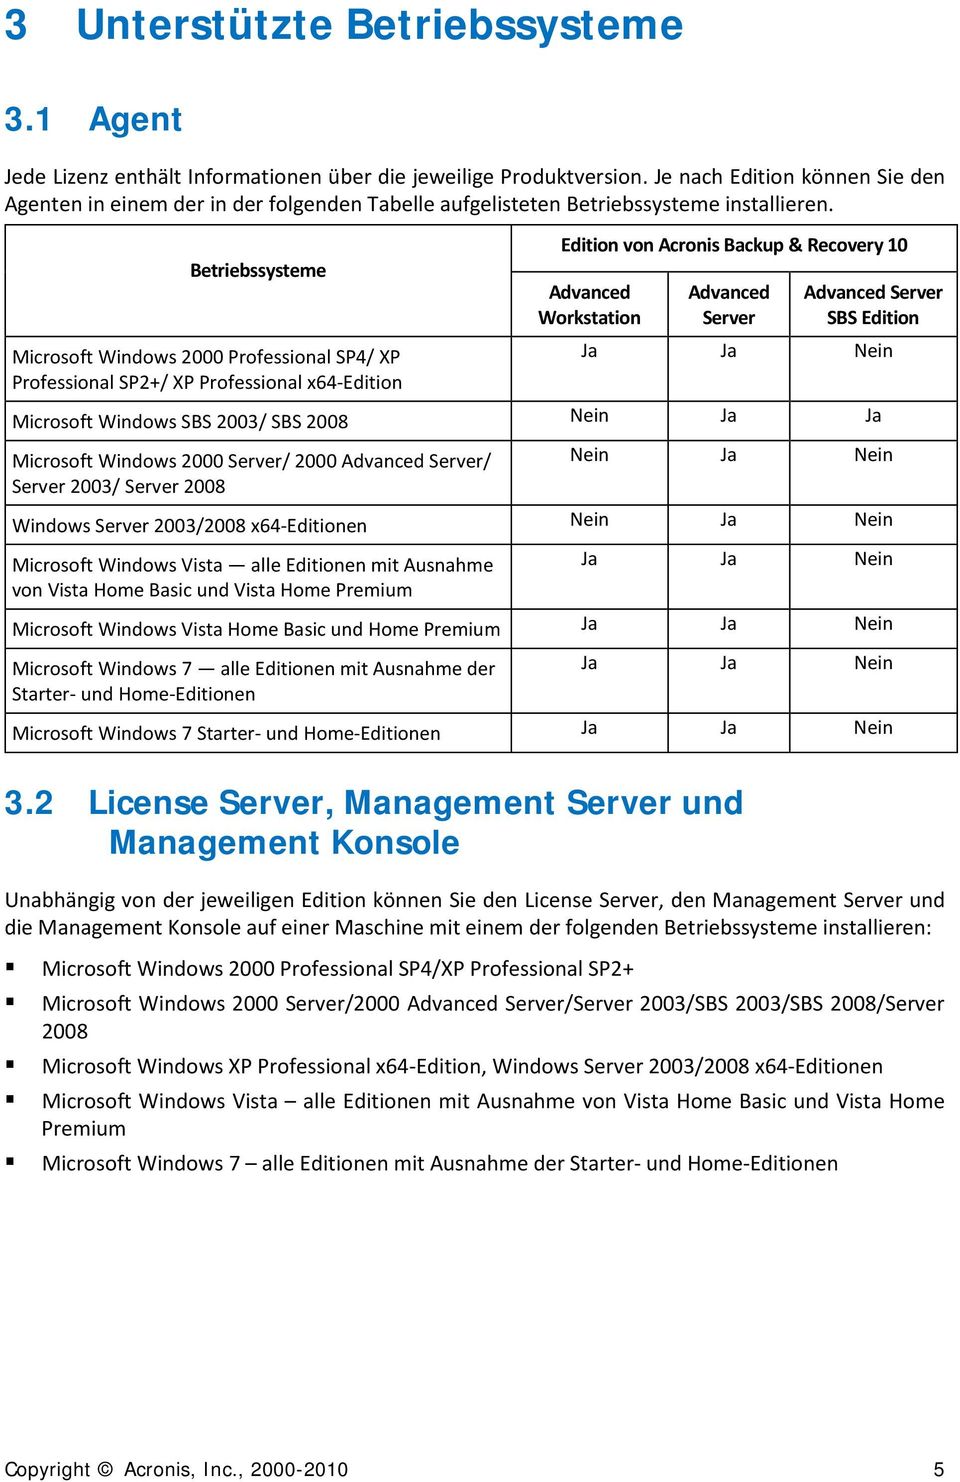 Betriebssysteme Microsoft Windows 2000 Professional SP4/ XP Professional SP2+/ XP Professional x64-edition Edition von Acronis Backup & Recovery 10 Advanced Workstation Advanced Server Advanced